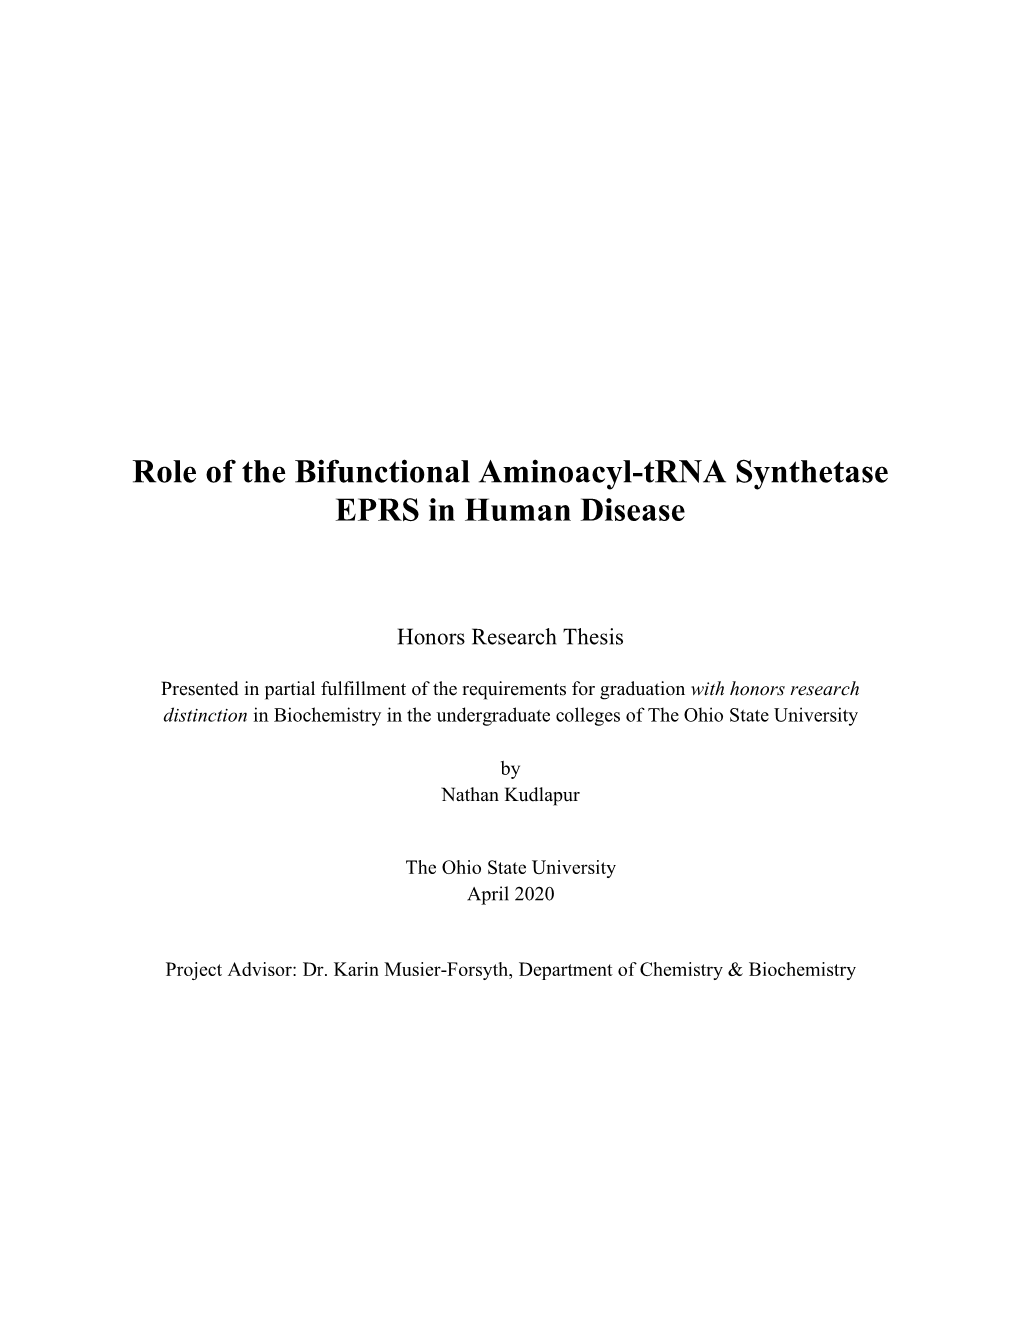 Role of the Bifunctional Aminoacyl-Trna Synthetase EPRS in Human Disease